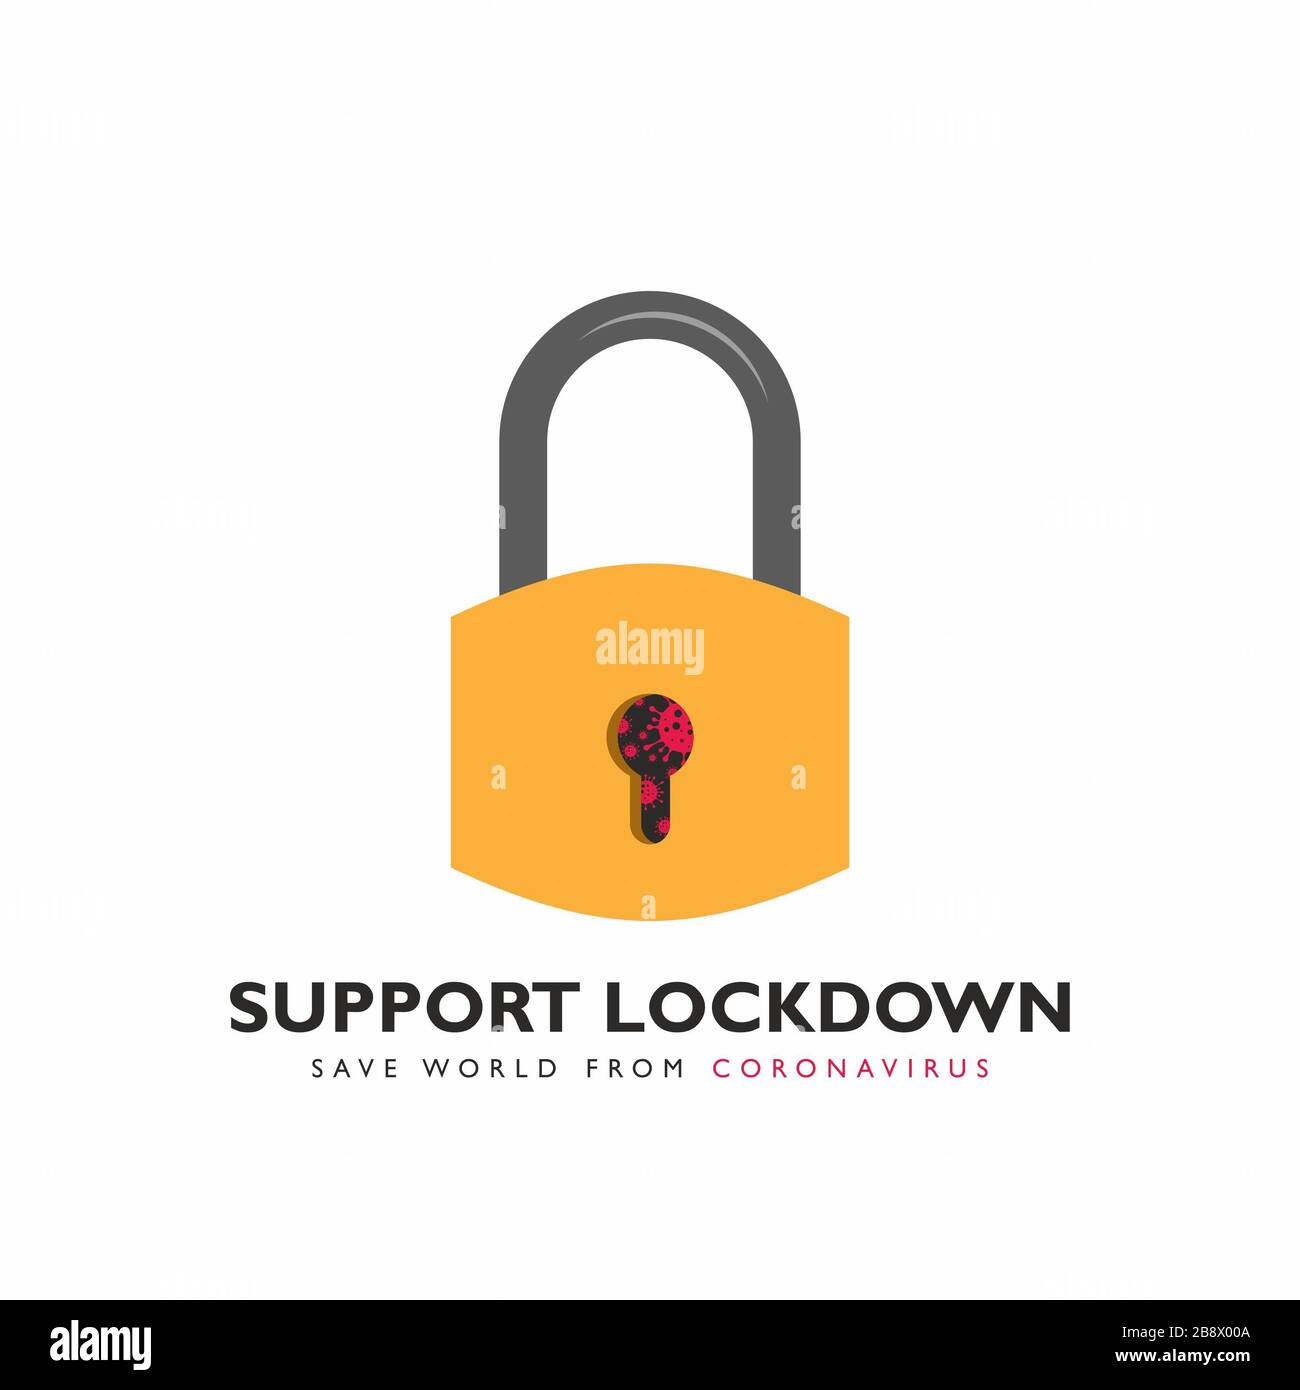 Support Lockdown. Save World From Coronavirus. Vector. Stock Photo